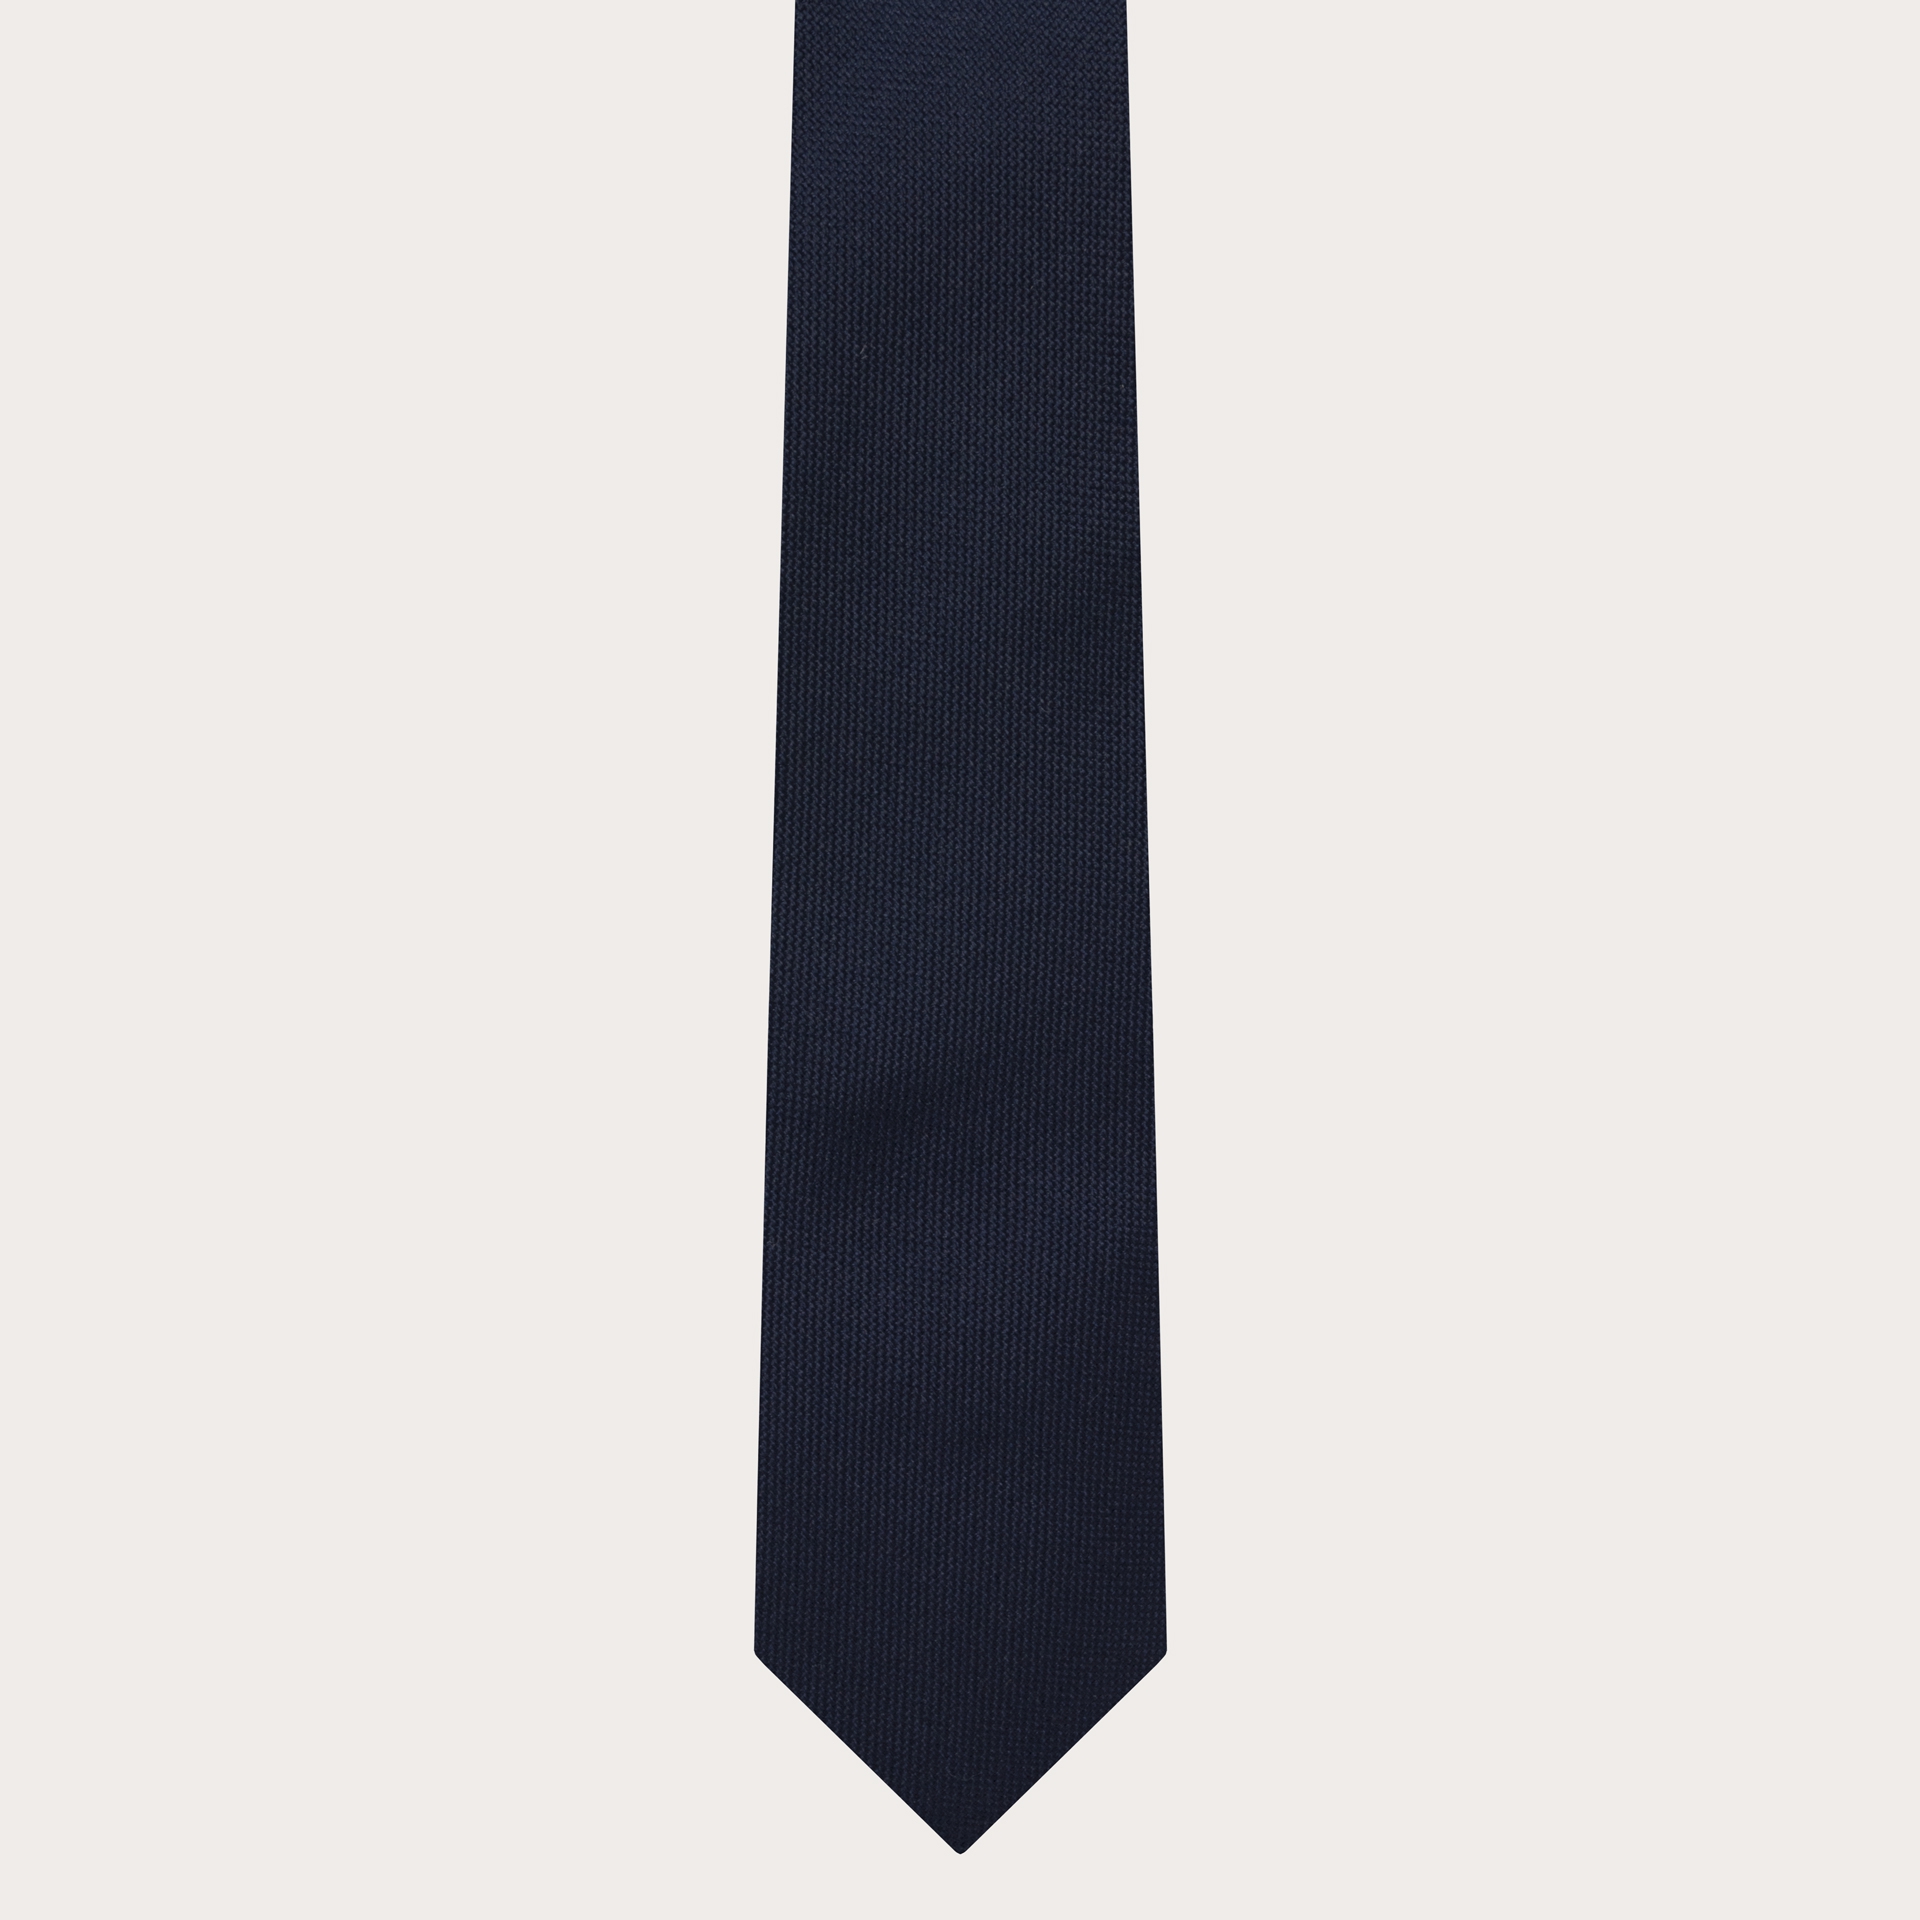 Cravatta sottile da uomo blu navy in seta